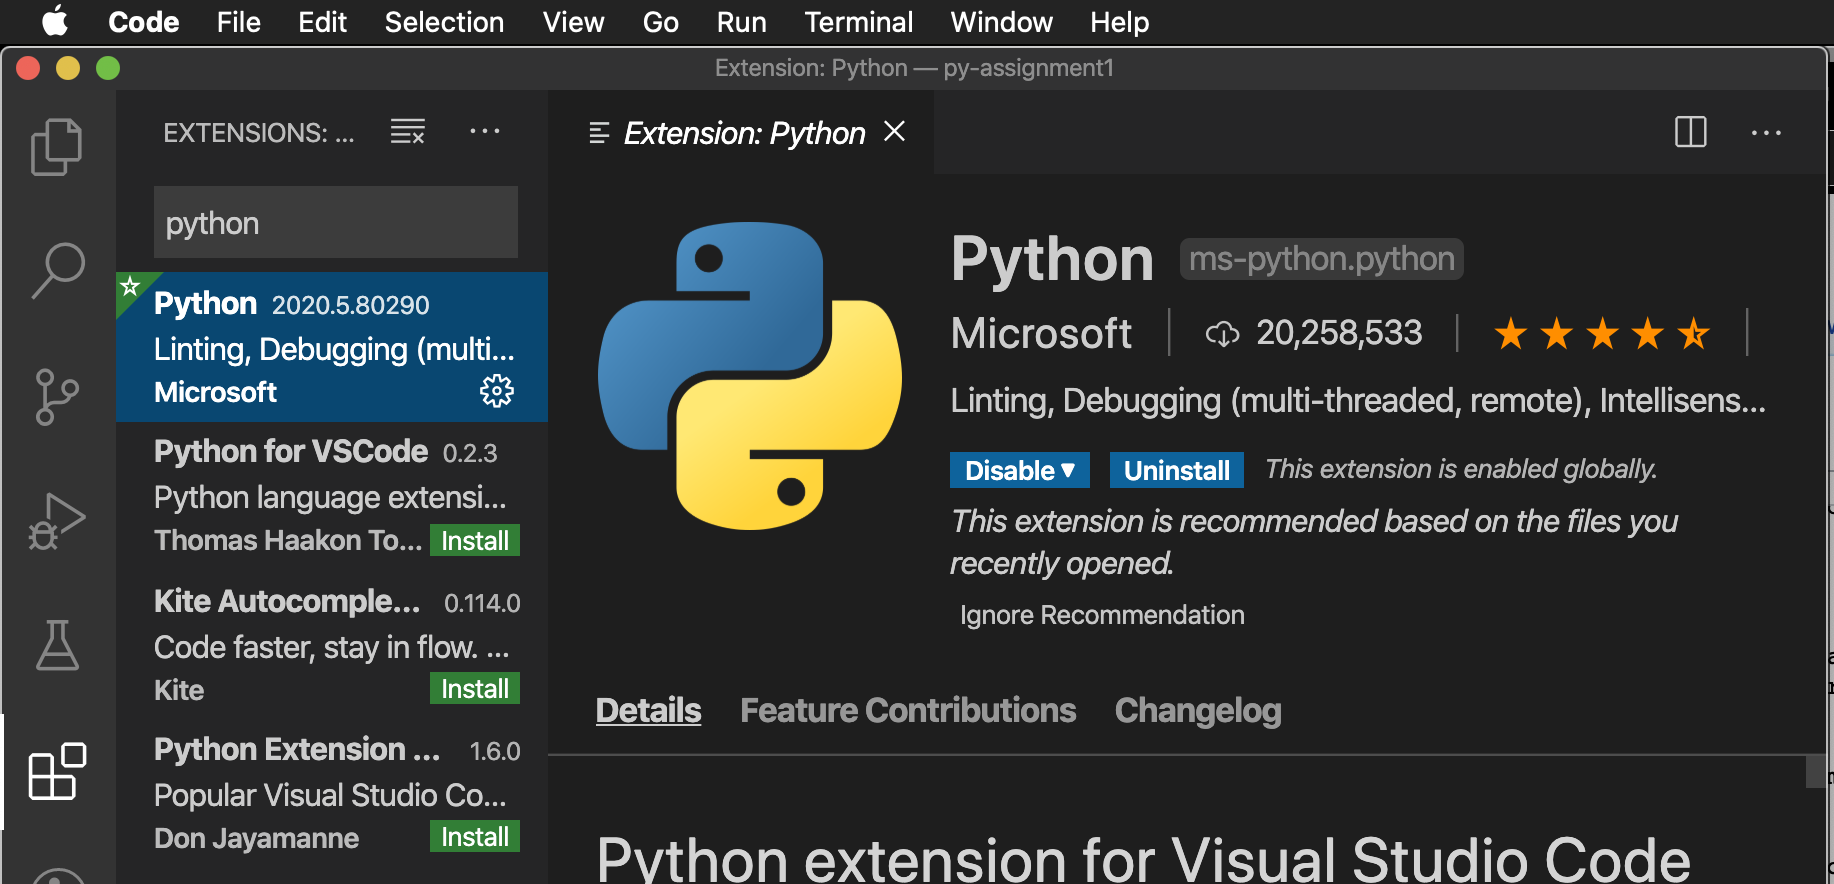 Visual Studio Code's Python
Extension